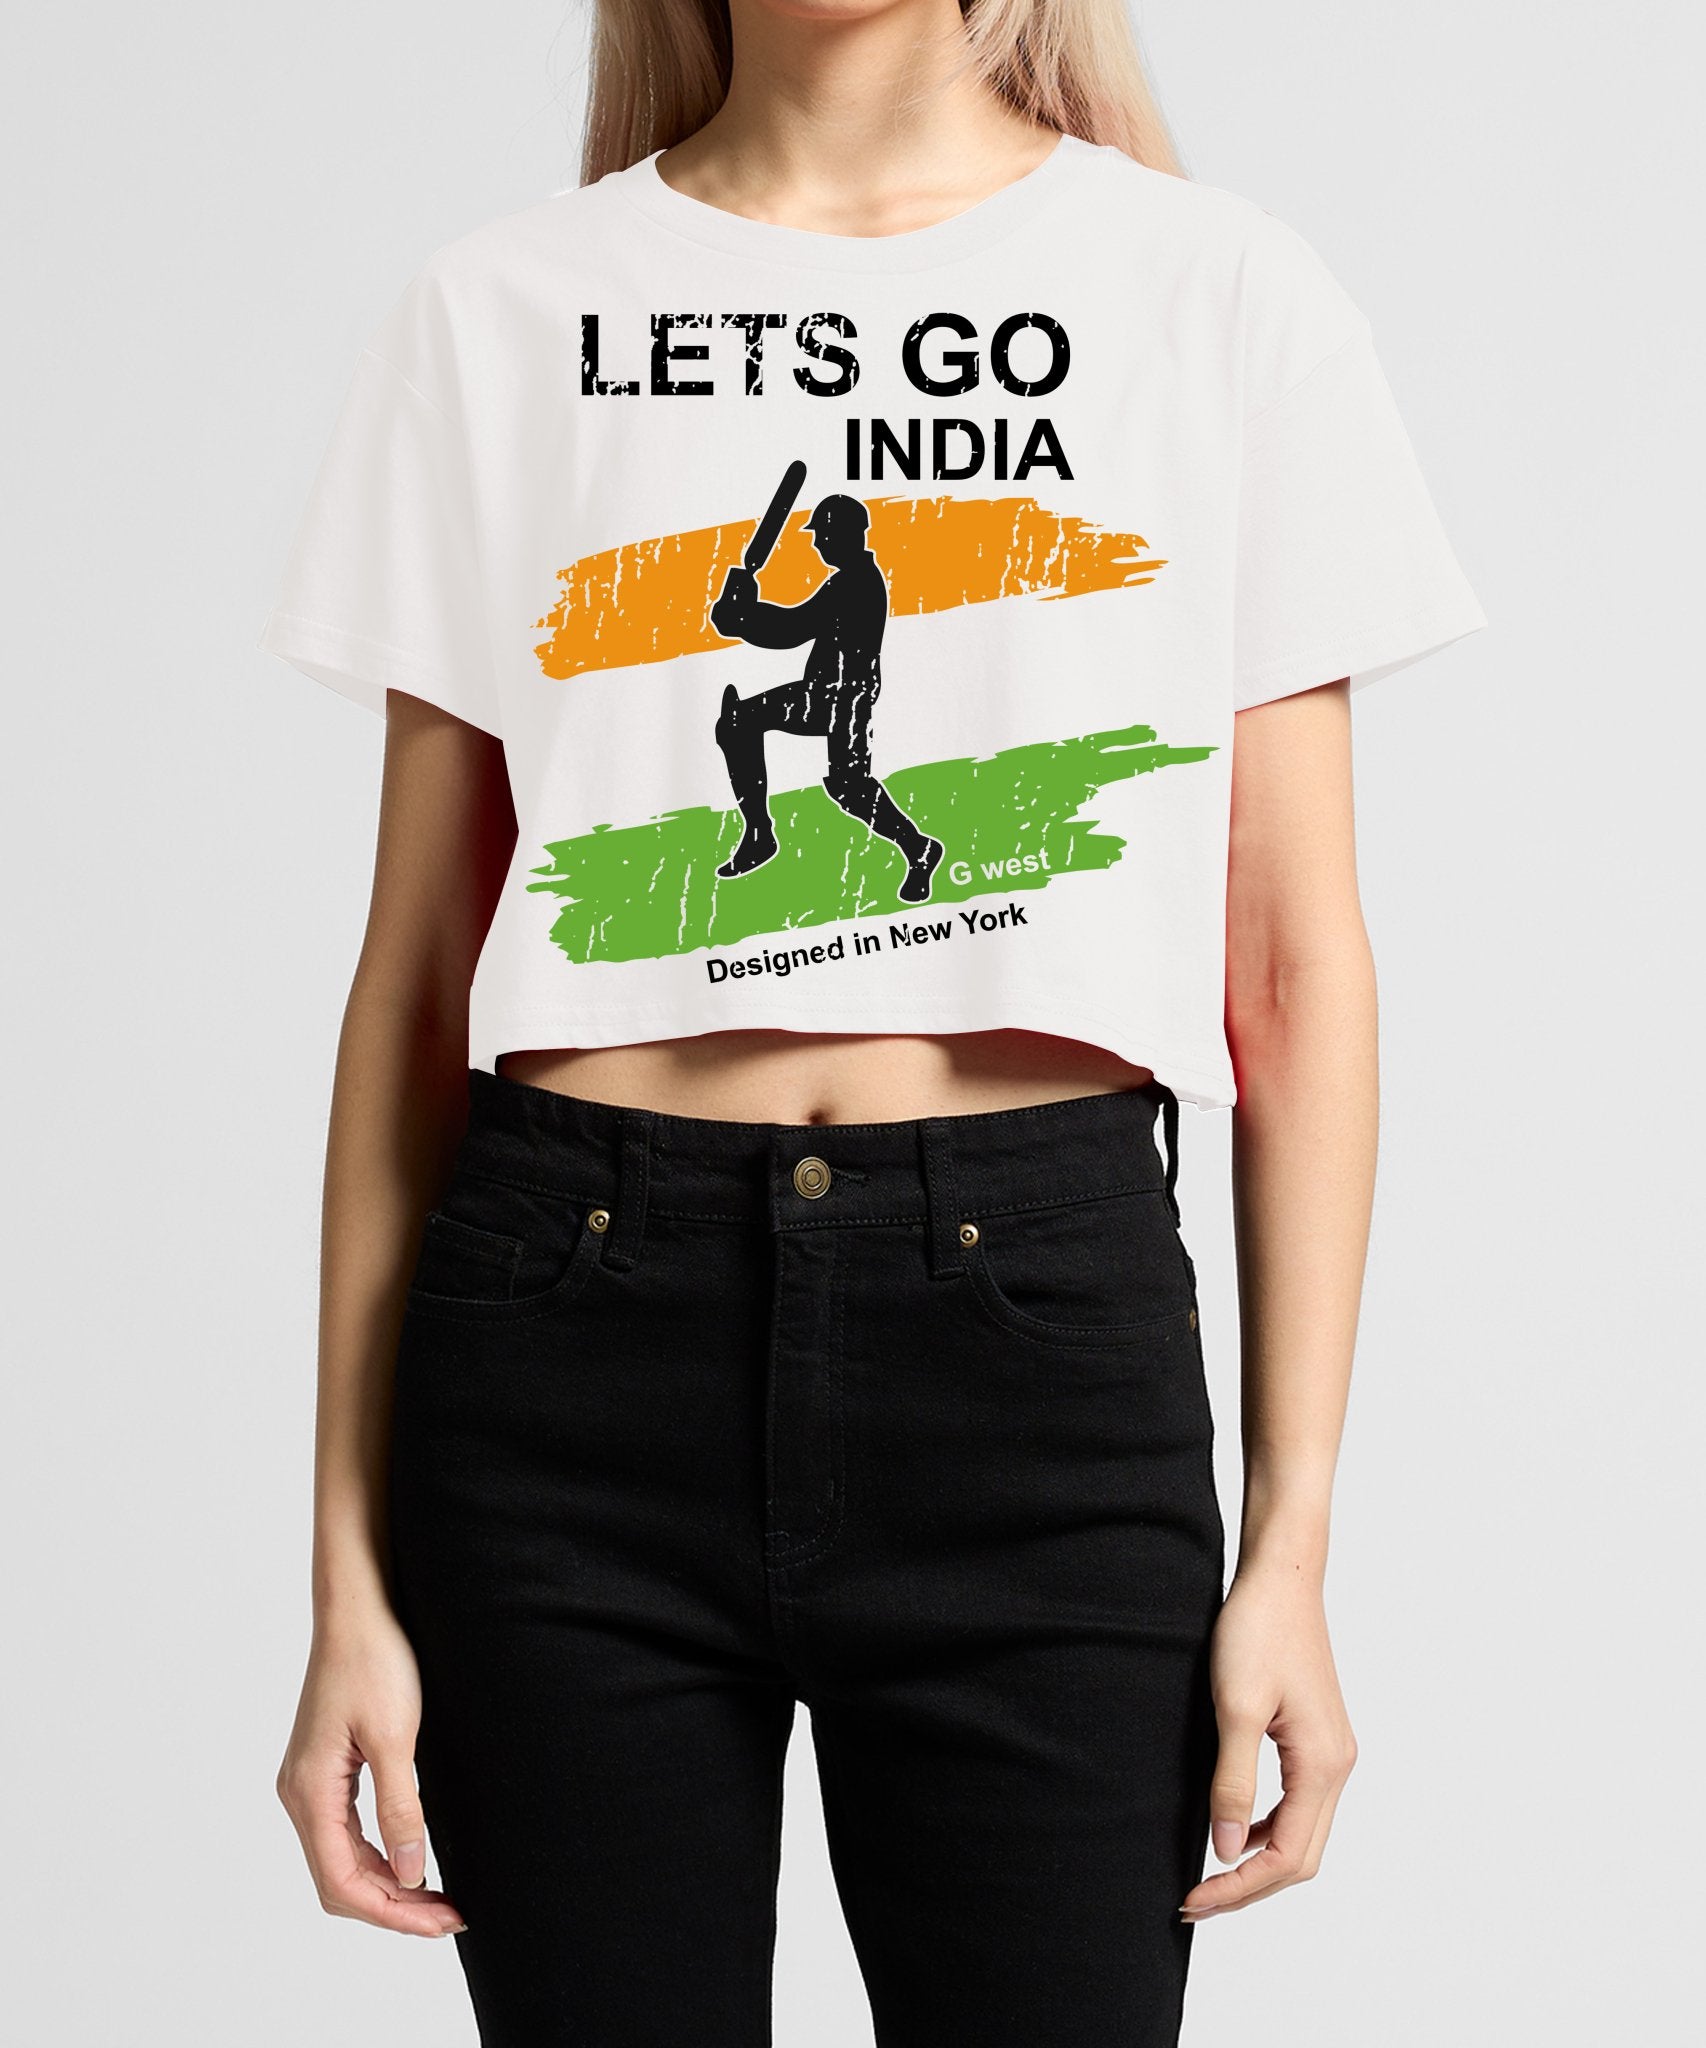 G West Women Cricket Lets Go India White T - Shirt : GWWSCDTF2406 - G West